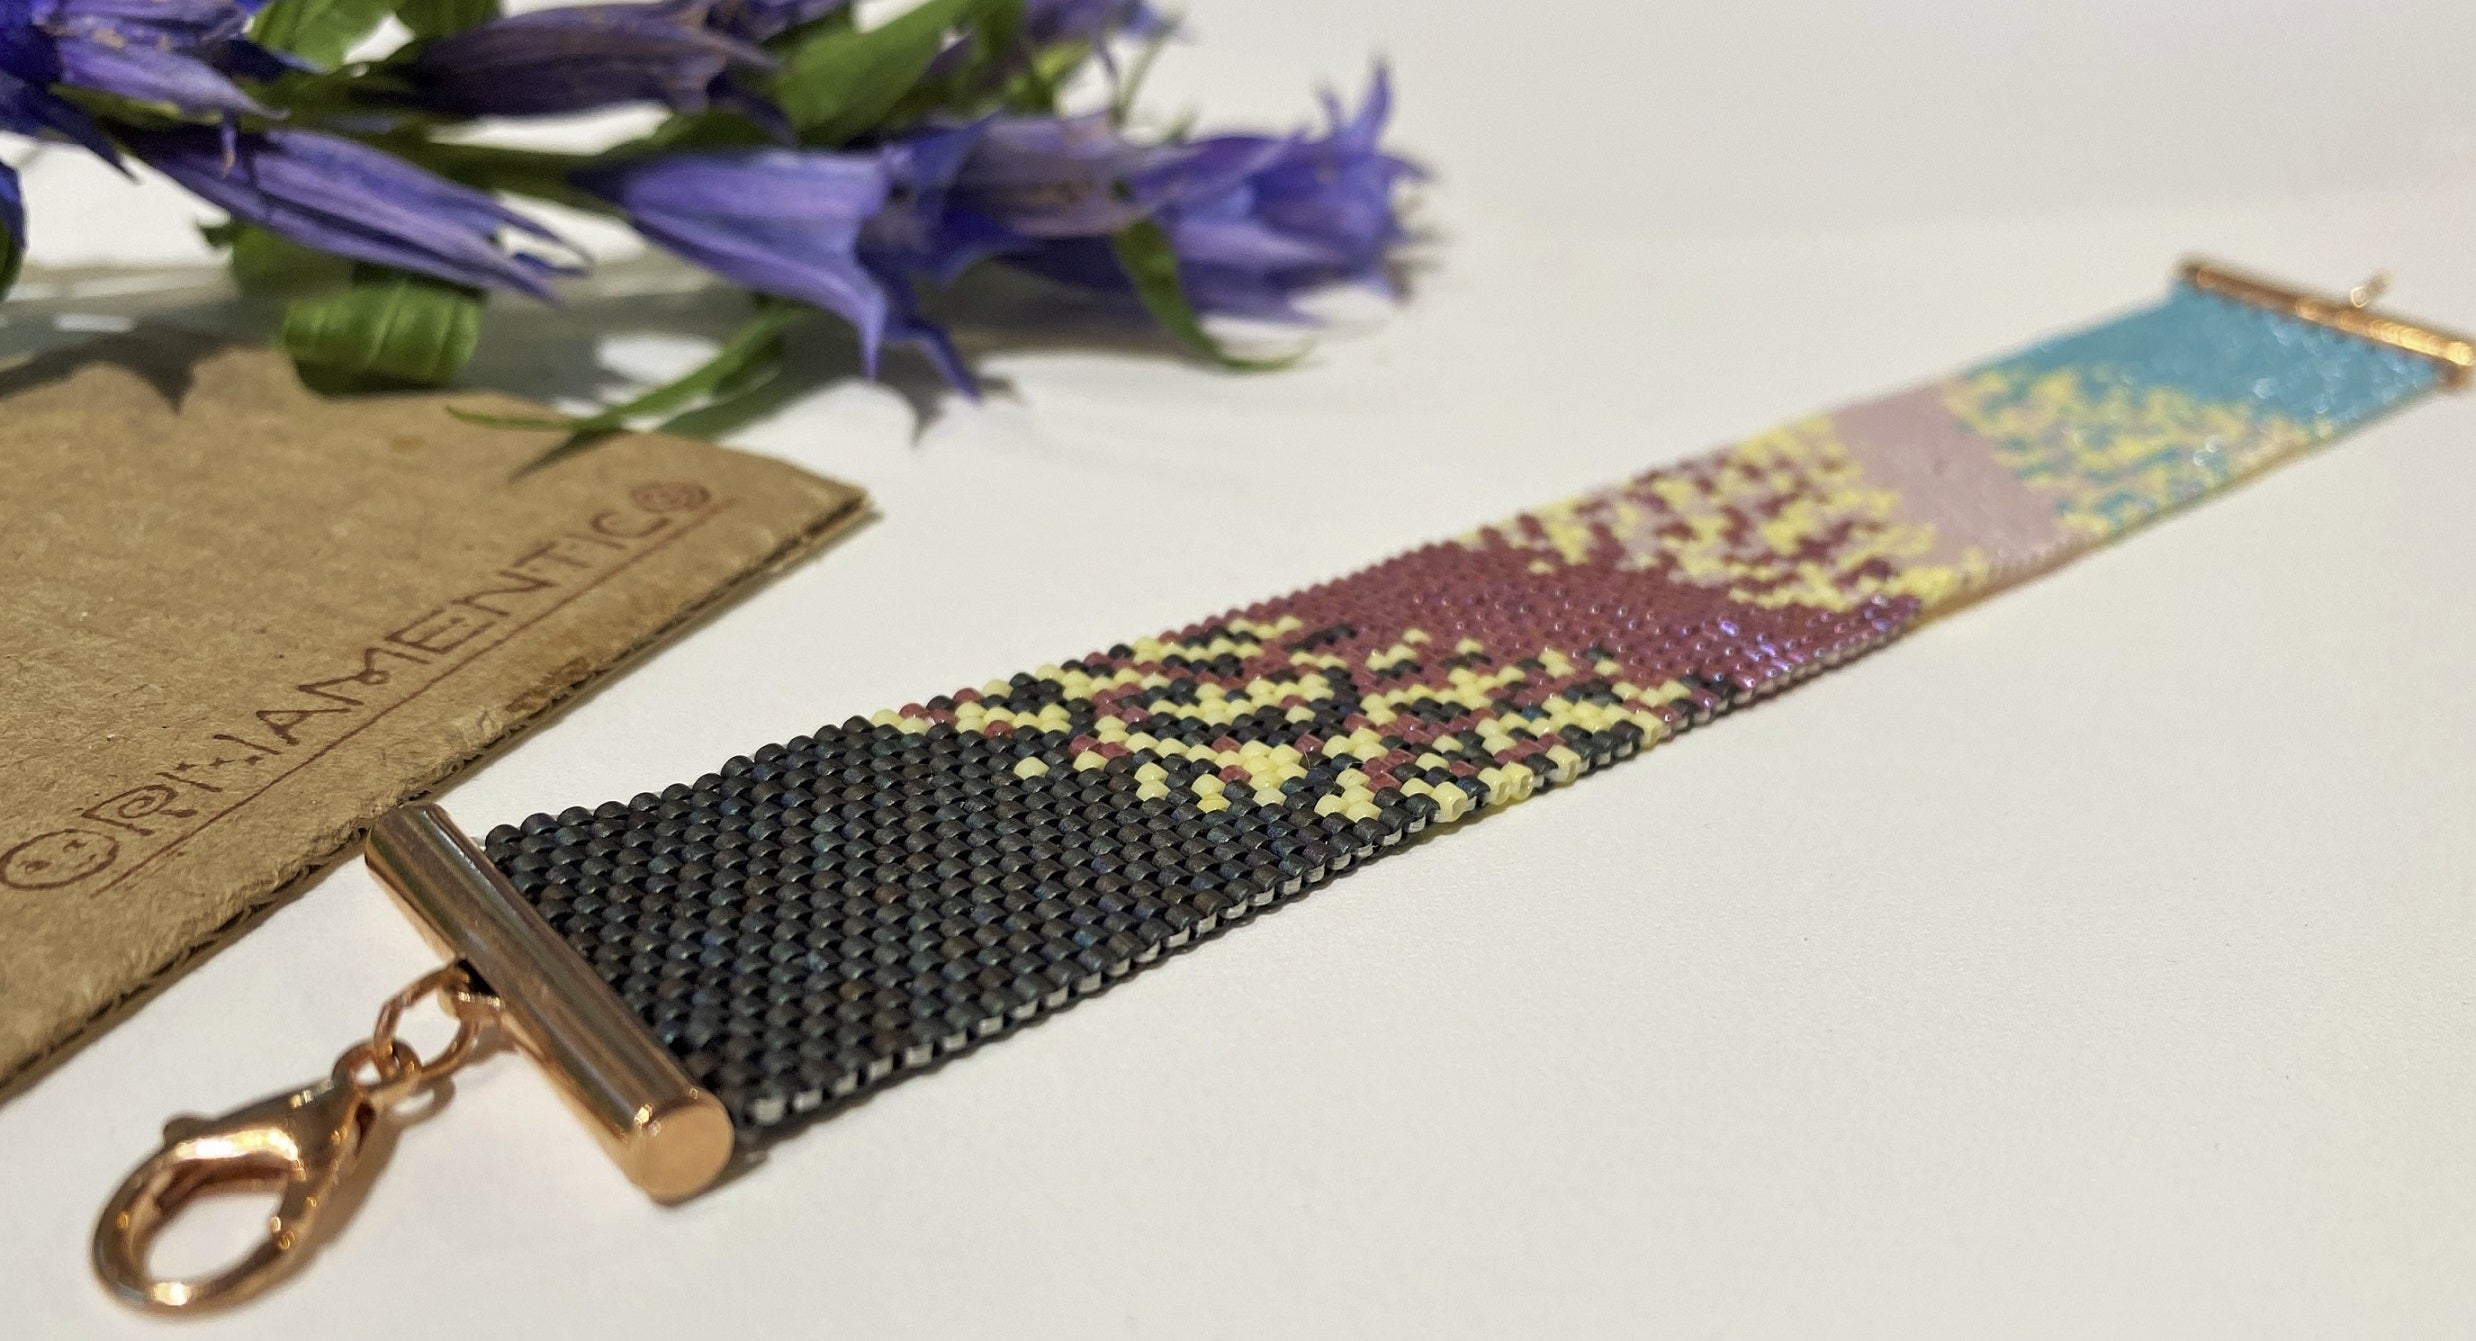 Colorful handmade bracelet from Japanese beads Miyuki made in Peyote technique